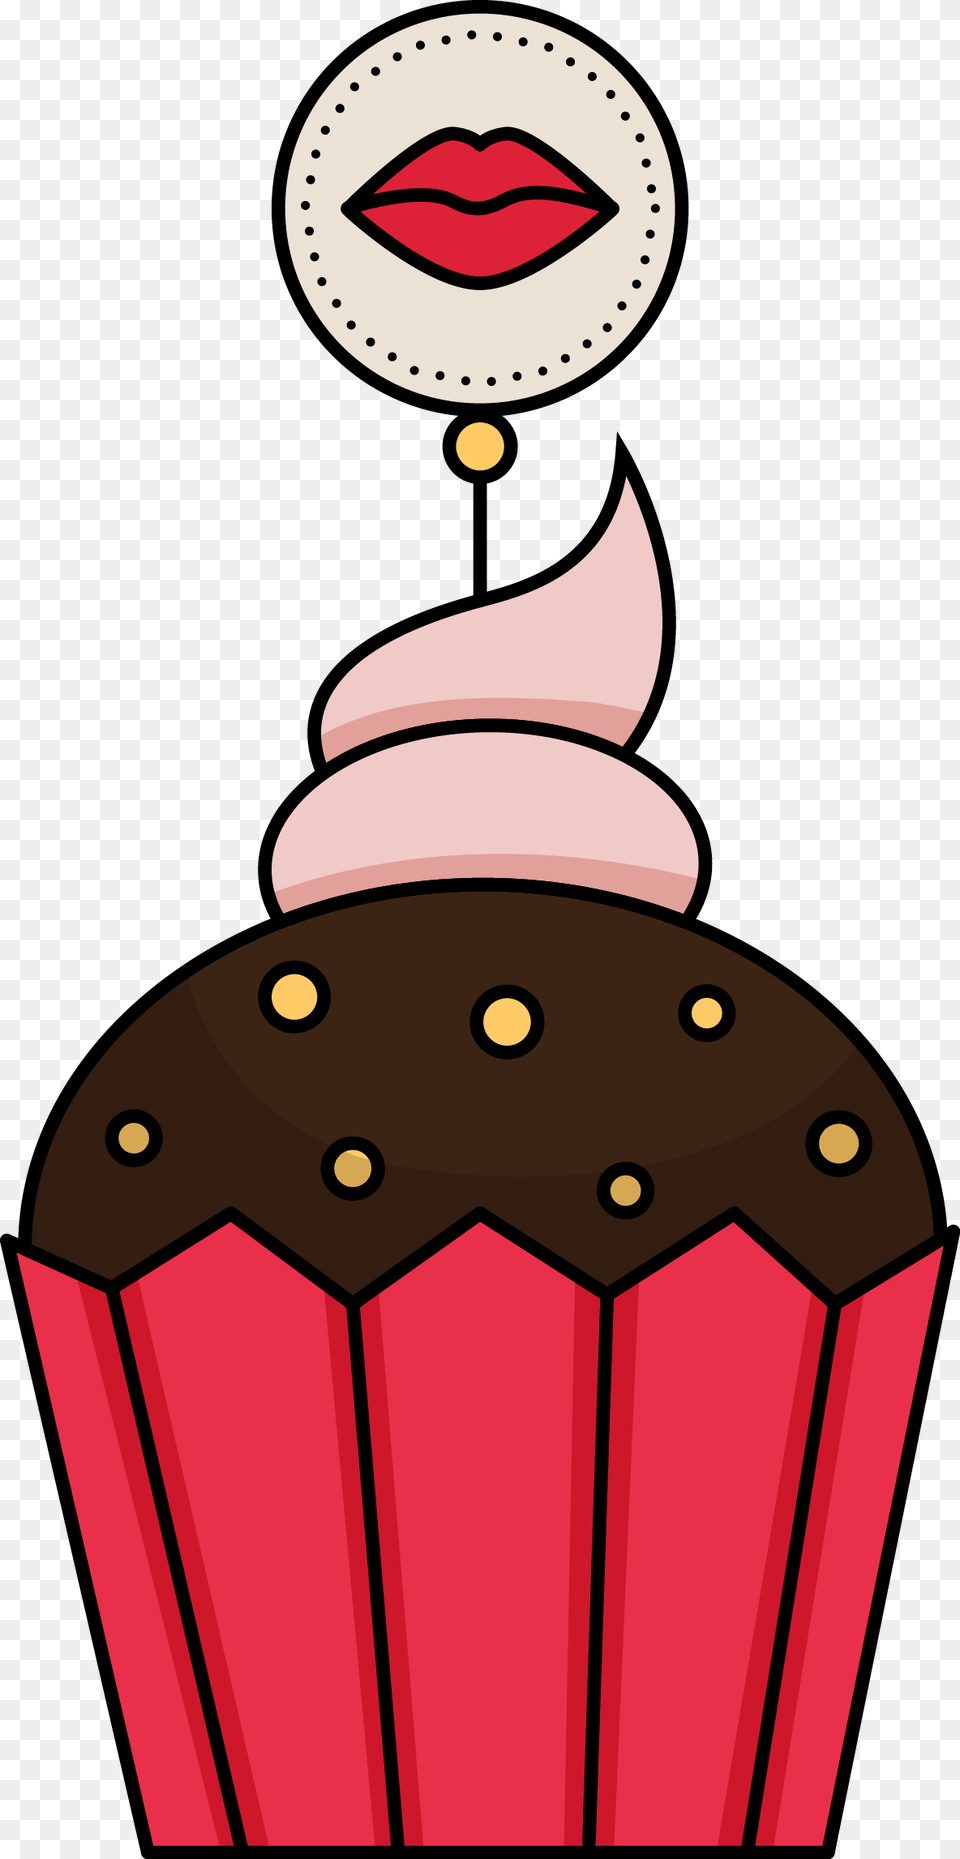 Cute Cupcakes Clipart Download Cupcake Cake Cute Drawing, Cream, Dessert, Food, Snowman Png Image